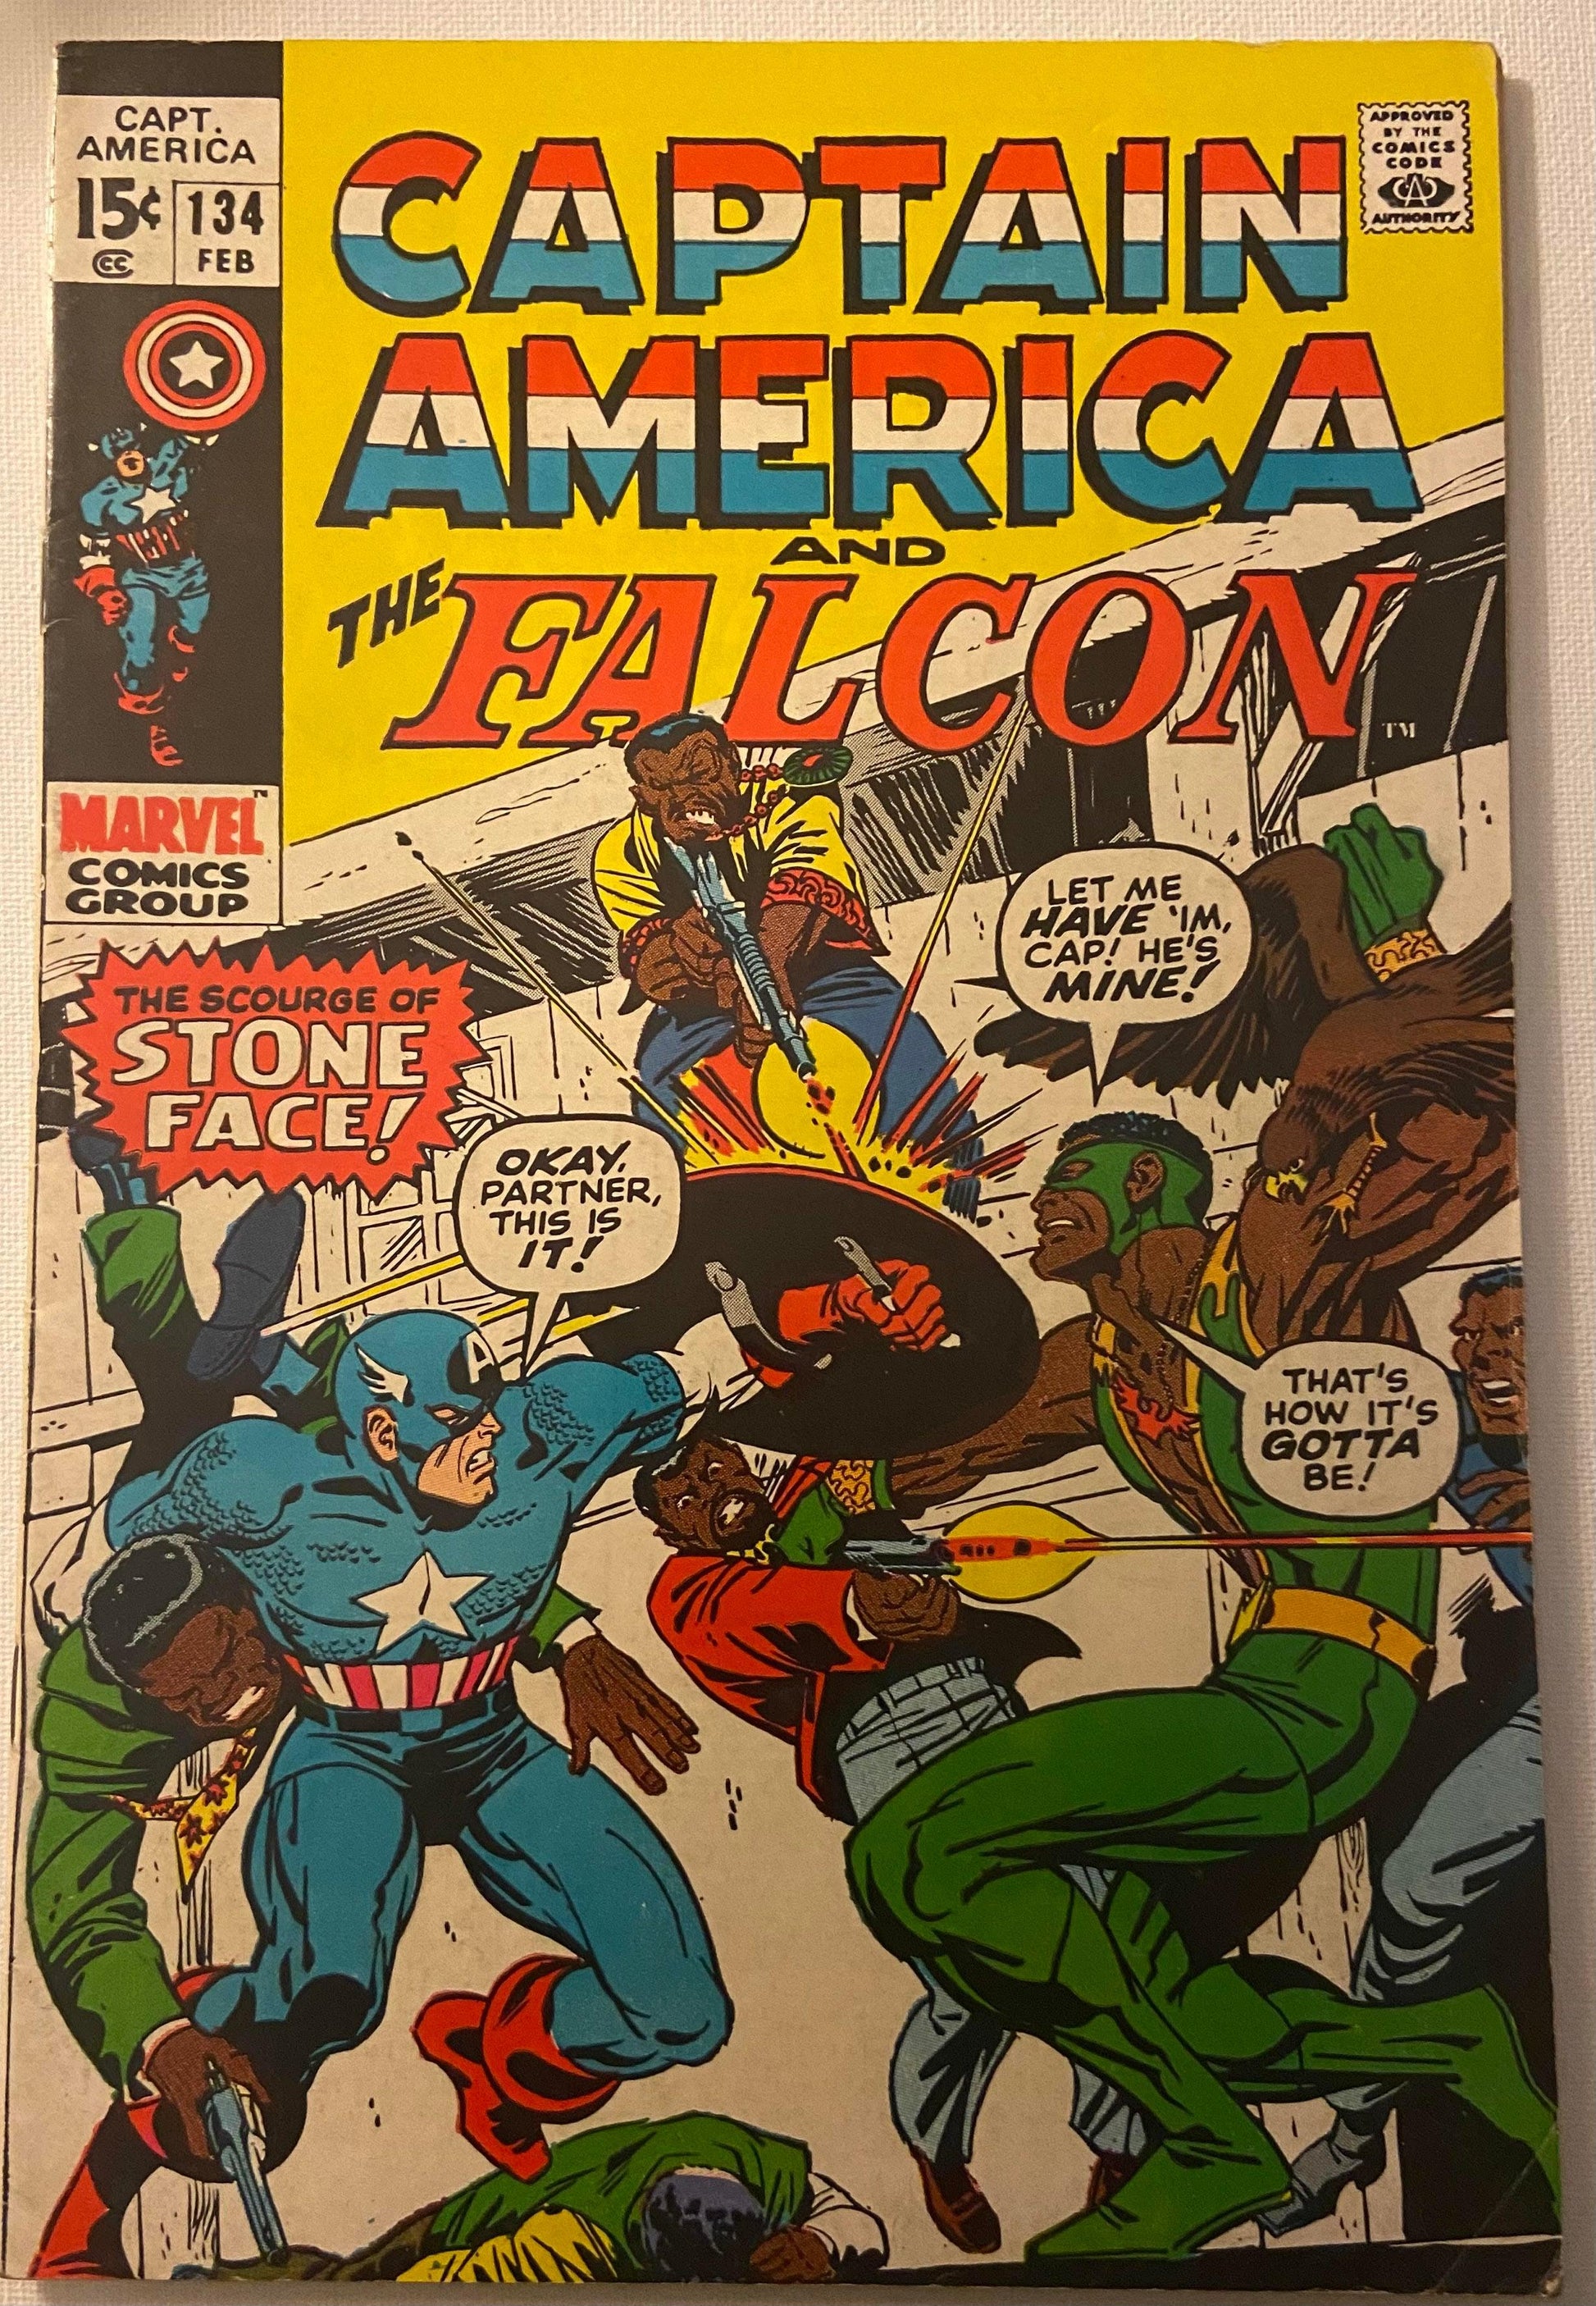 Captain America and Falcon #134 - HolyGrail Comix